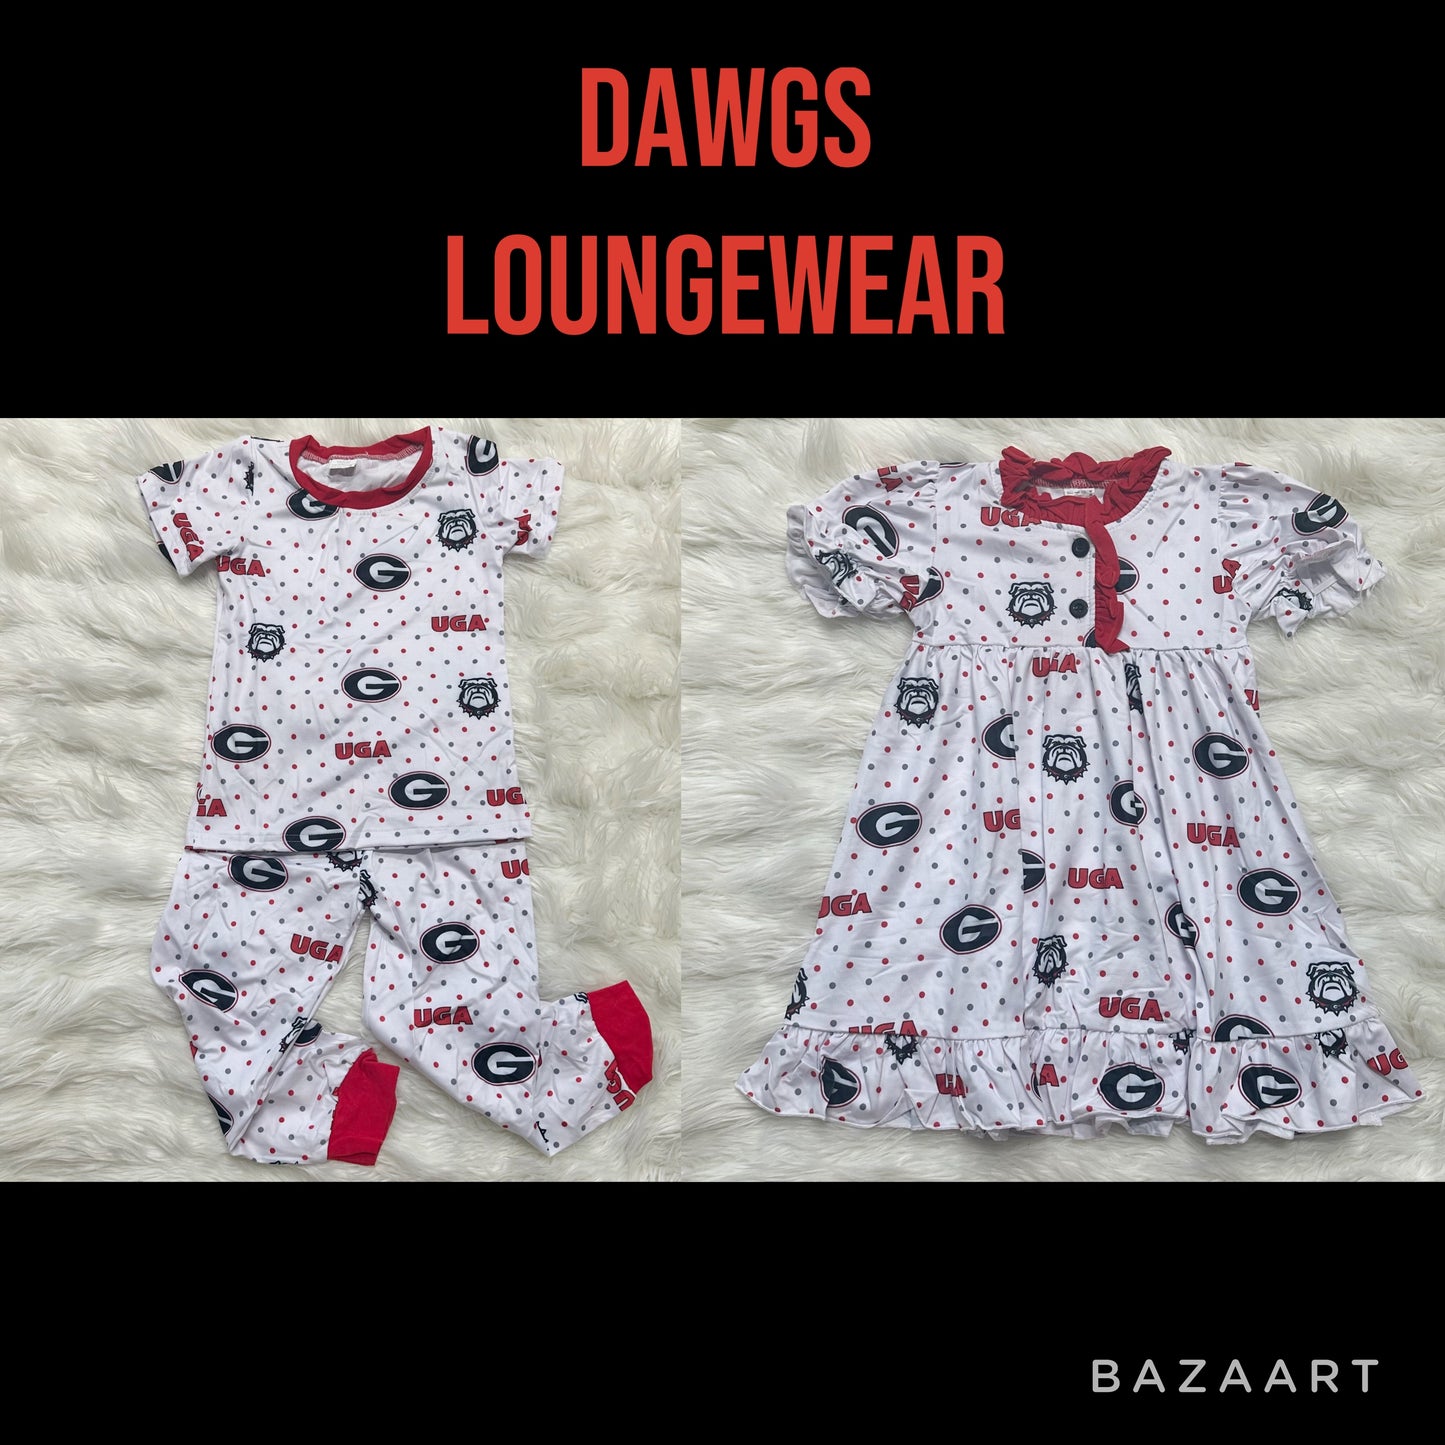 Dawgs Loungewear (RTS)